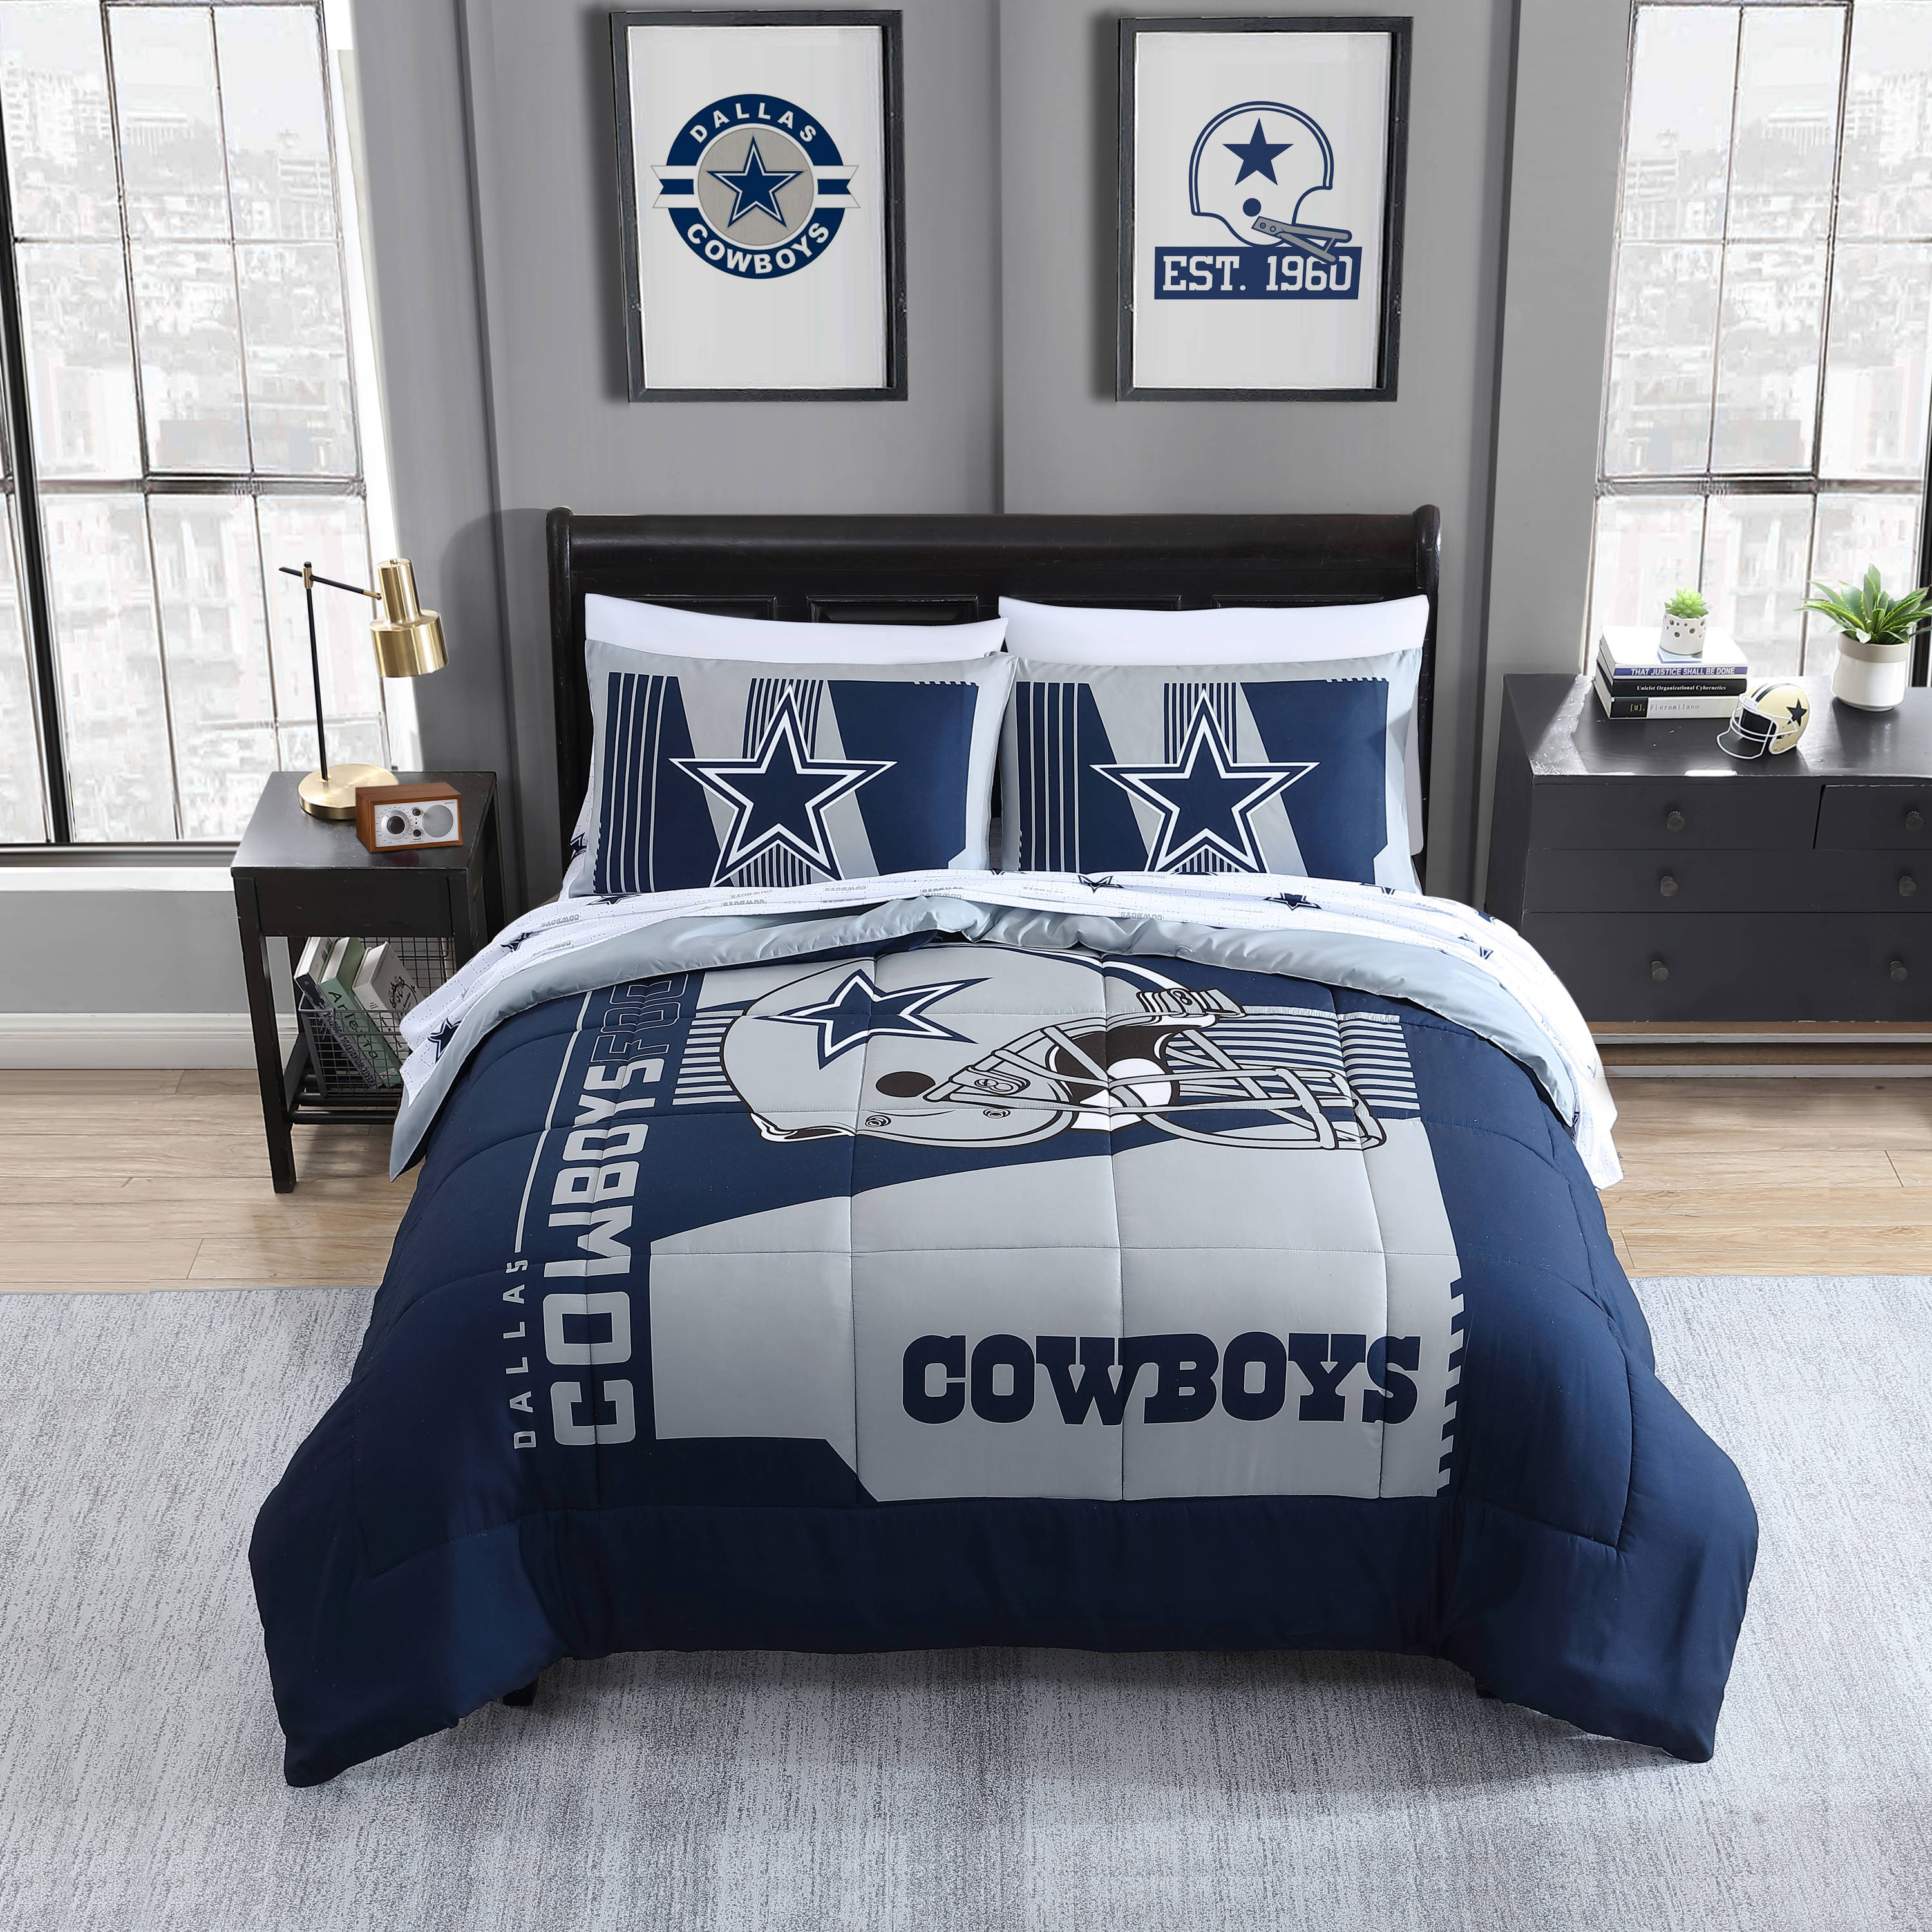 Dallas Cowboys Western Star Design Quilt BedSpread Comforter Navy Blue Set HOT+ 